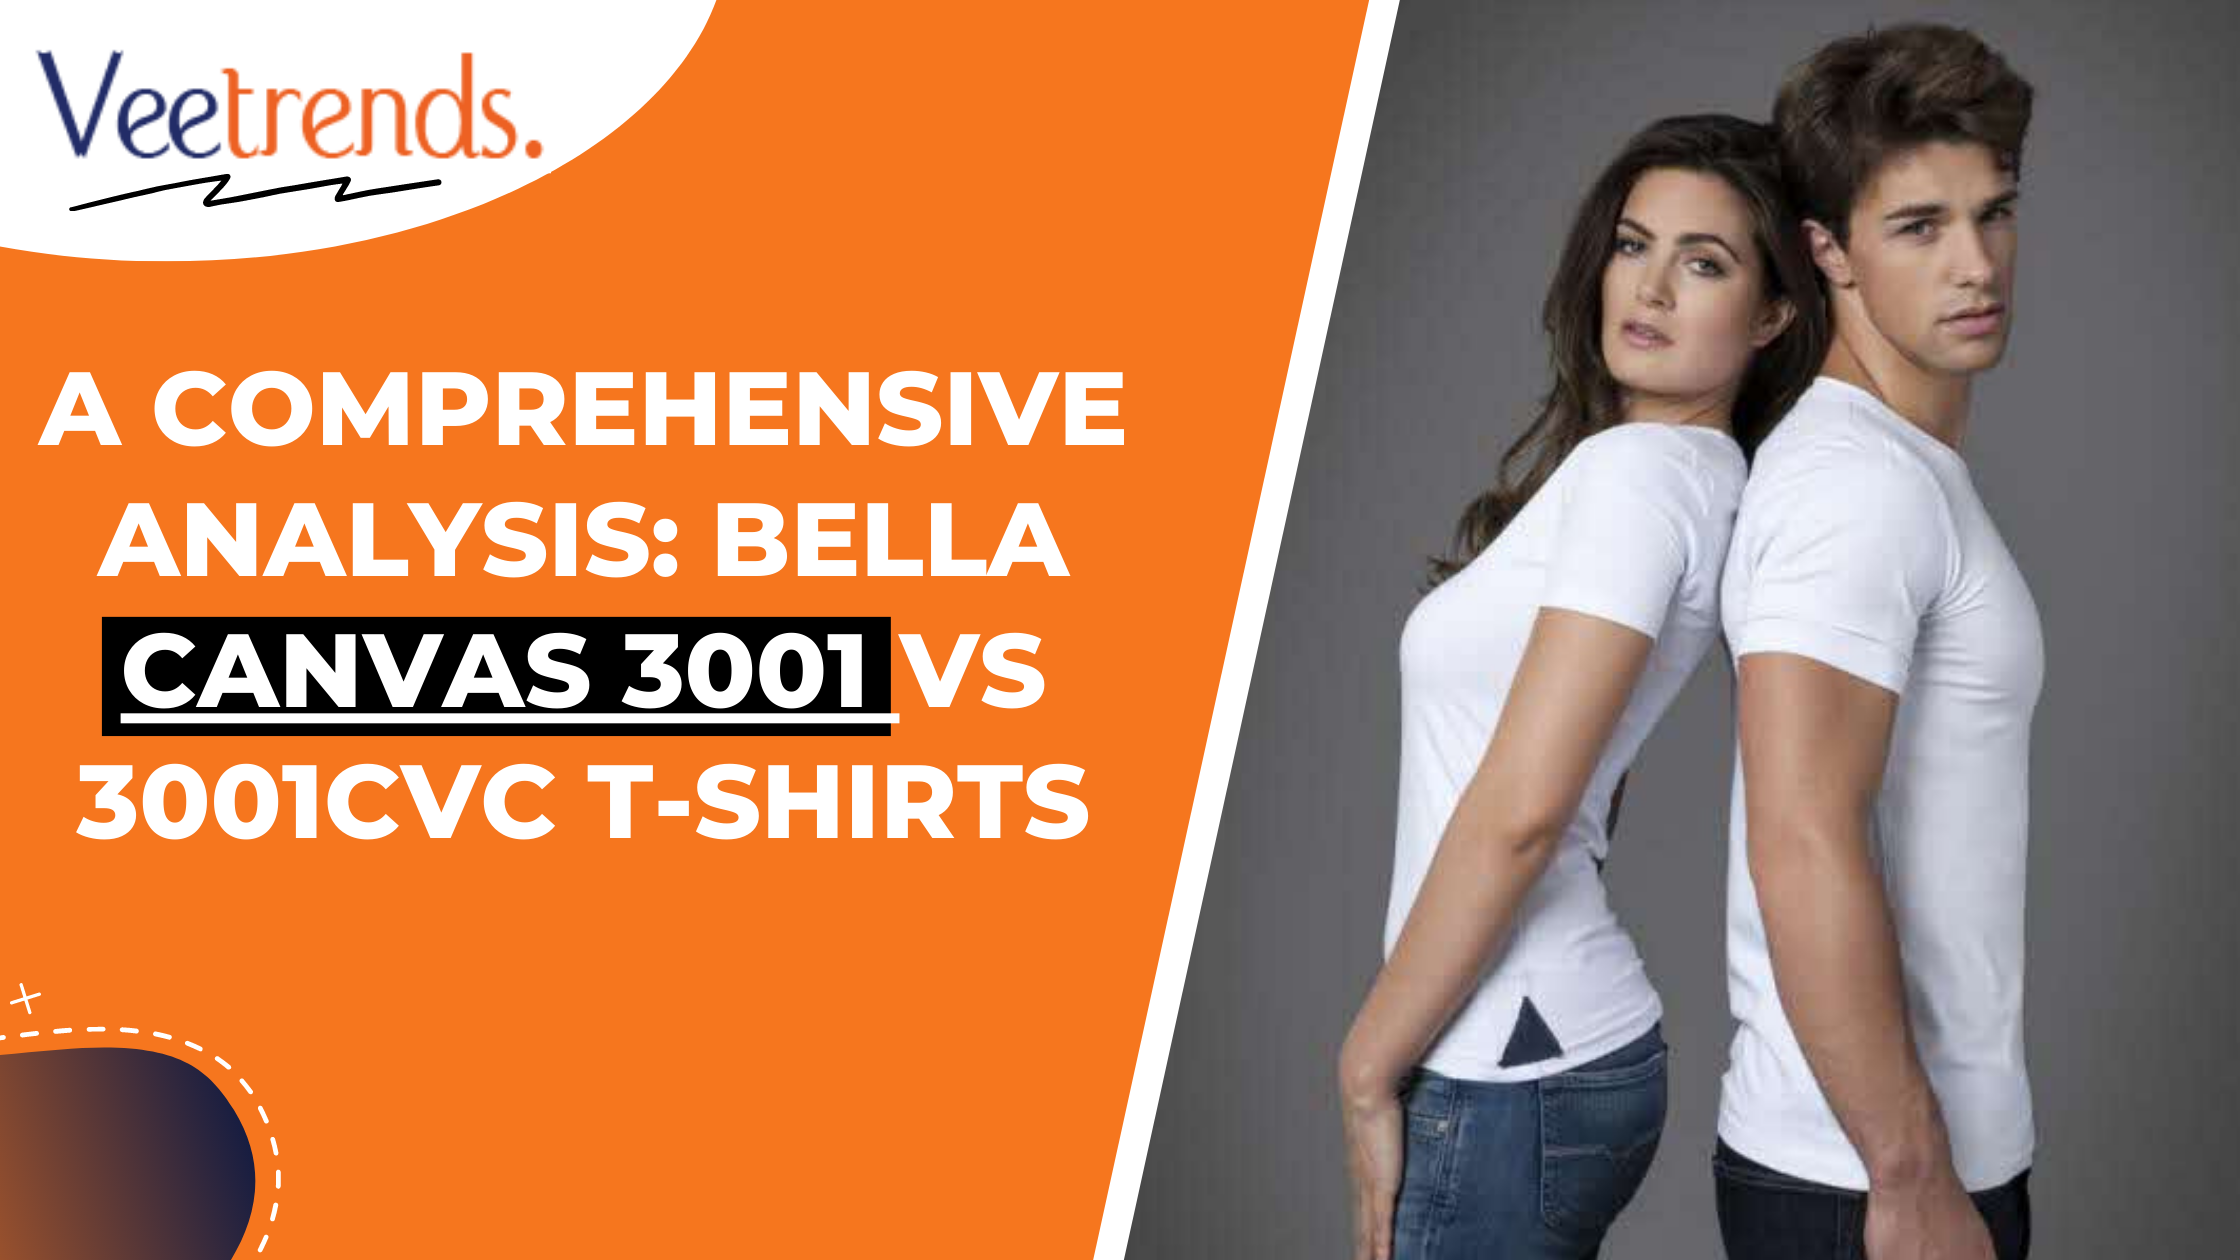 Comparison of Bella Canvas 3001 VS 3001CVC T-Shirts